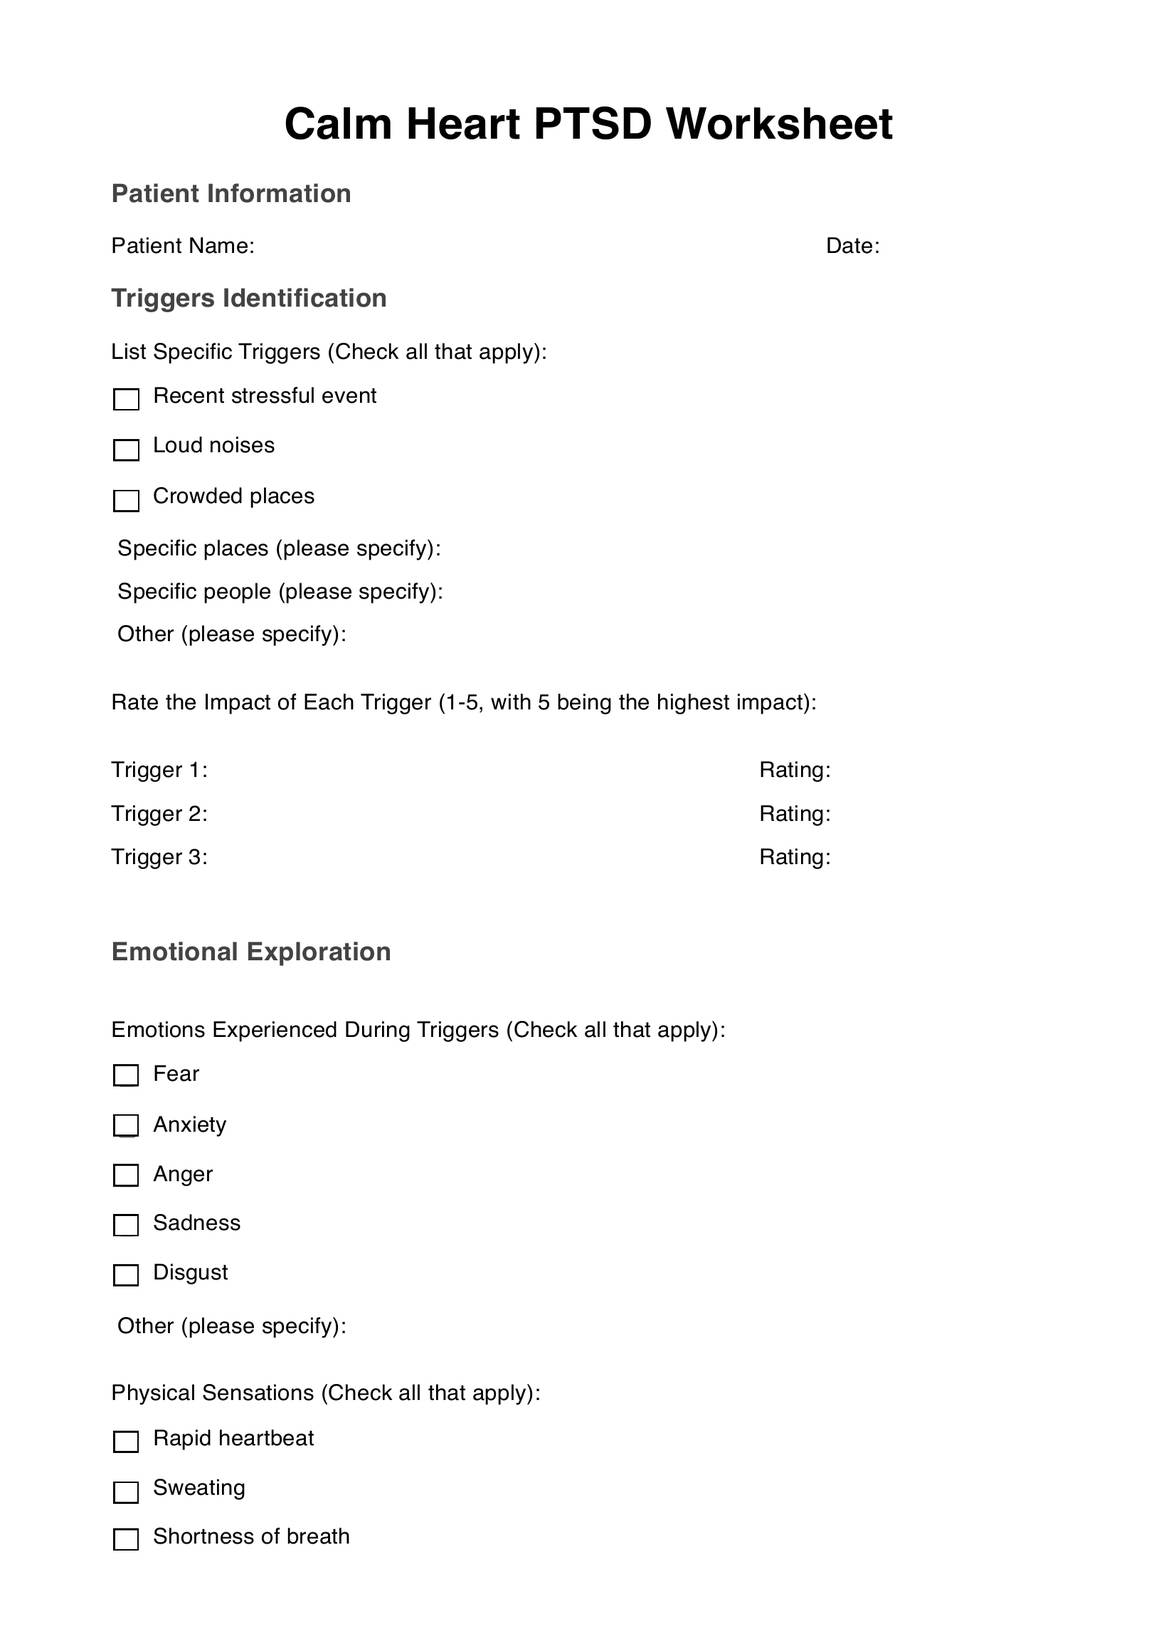 Calm Heart PTSD Worksheets PDF Example